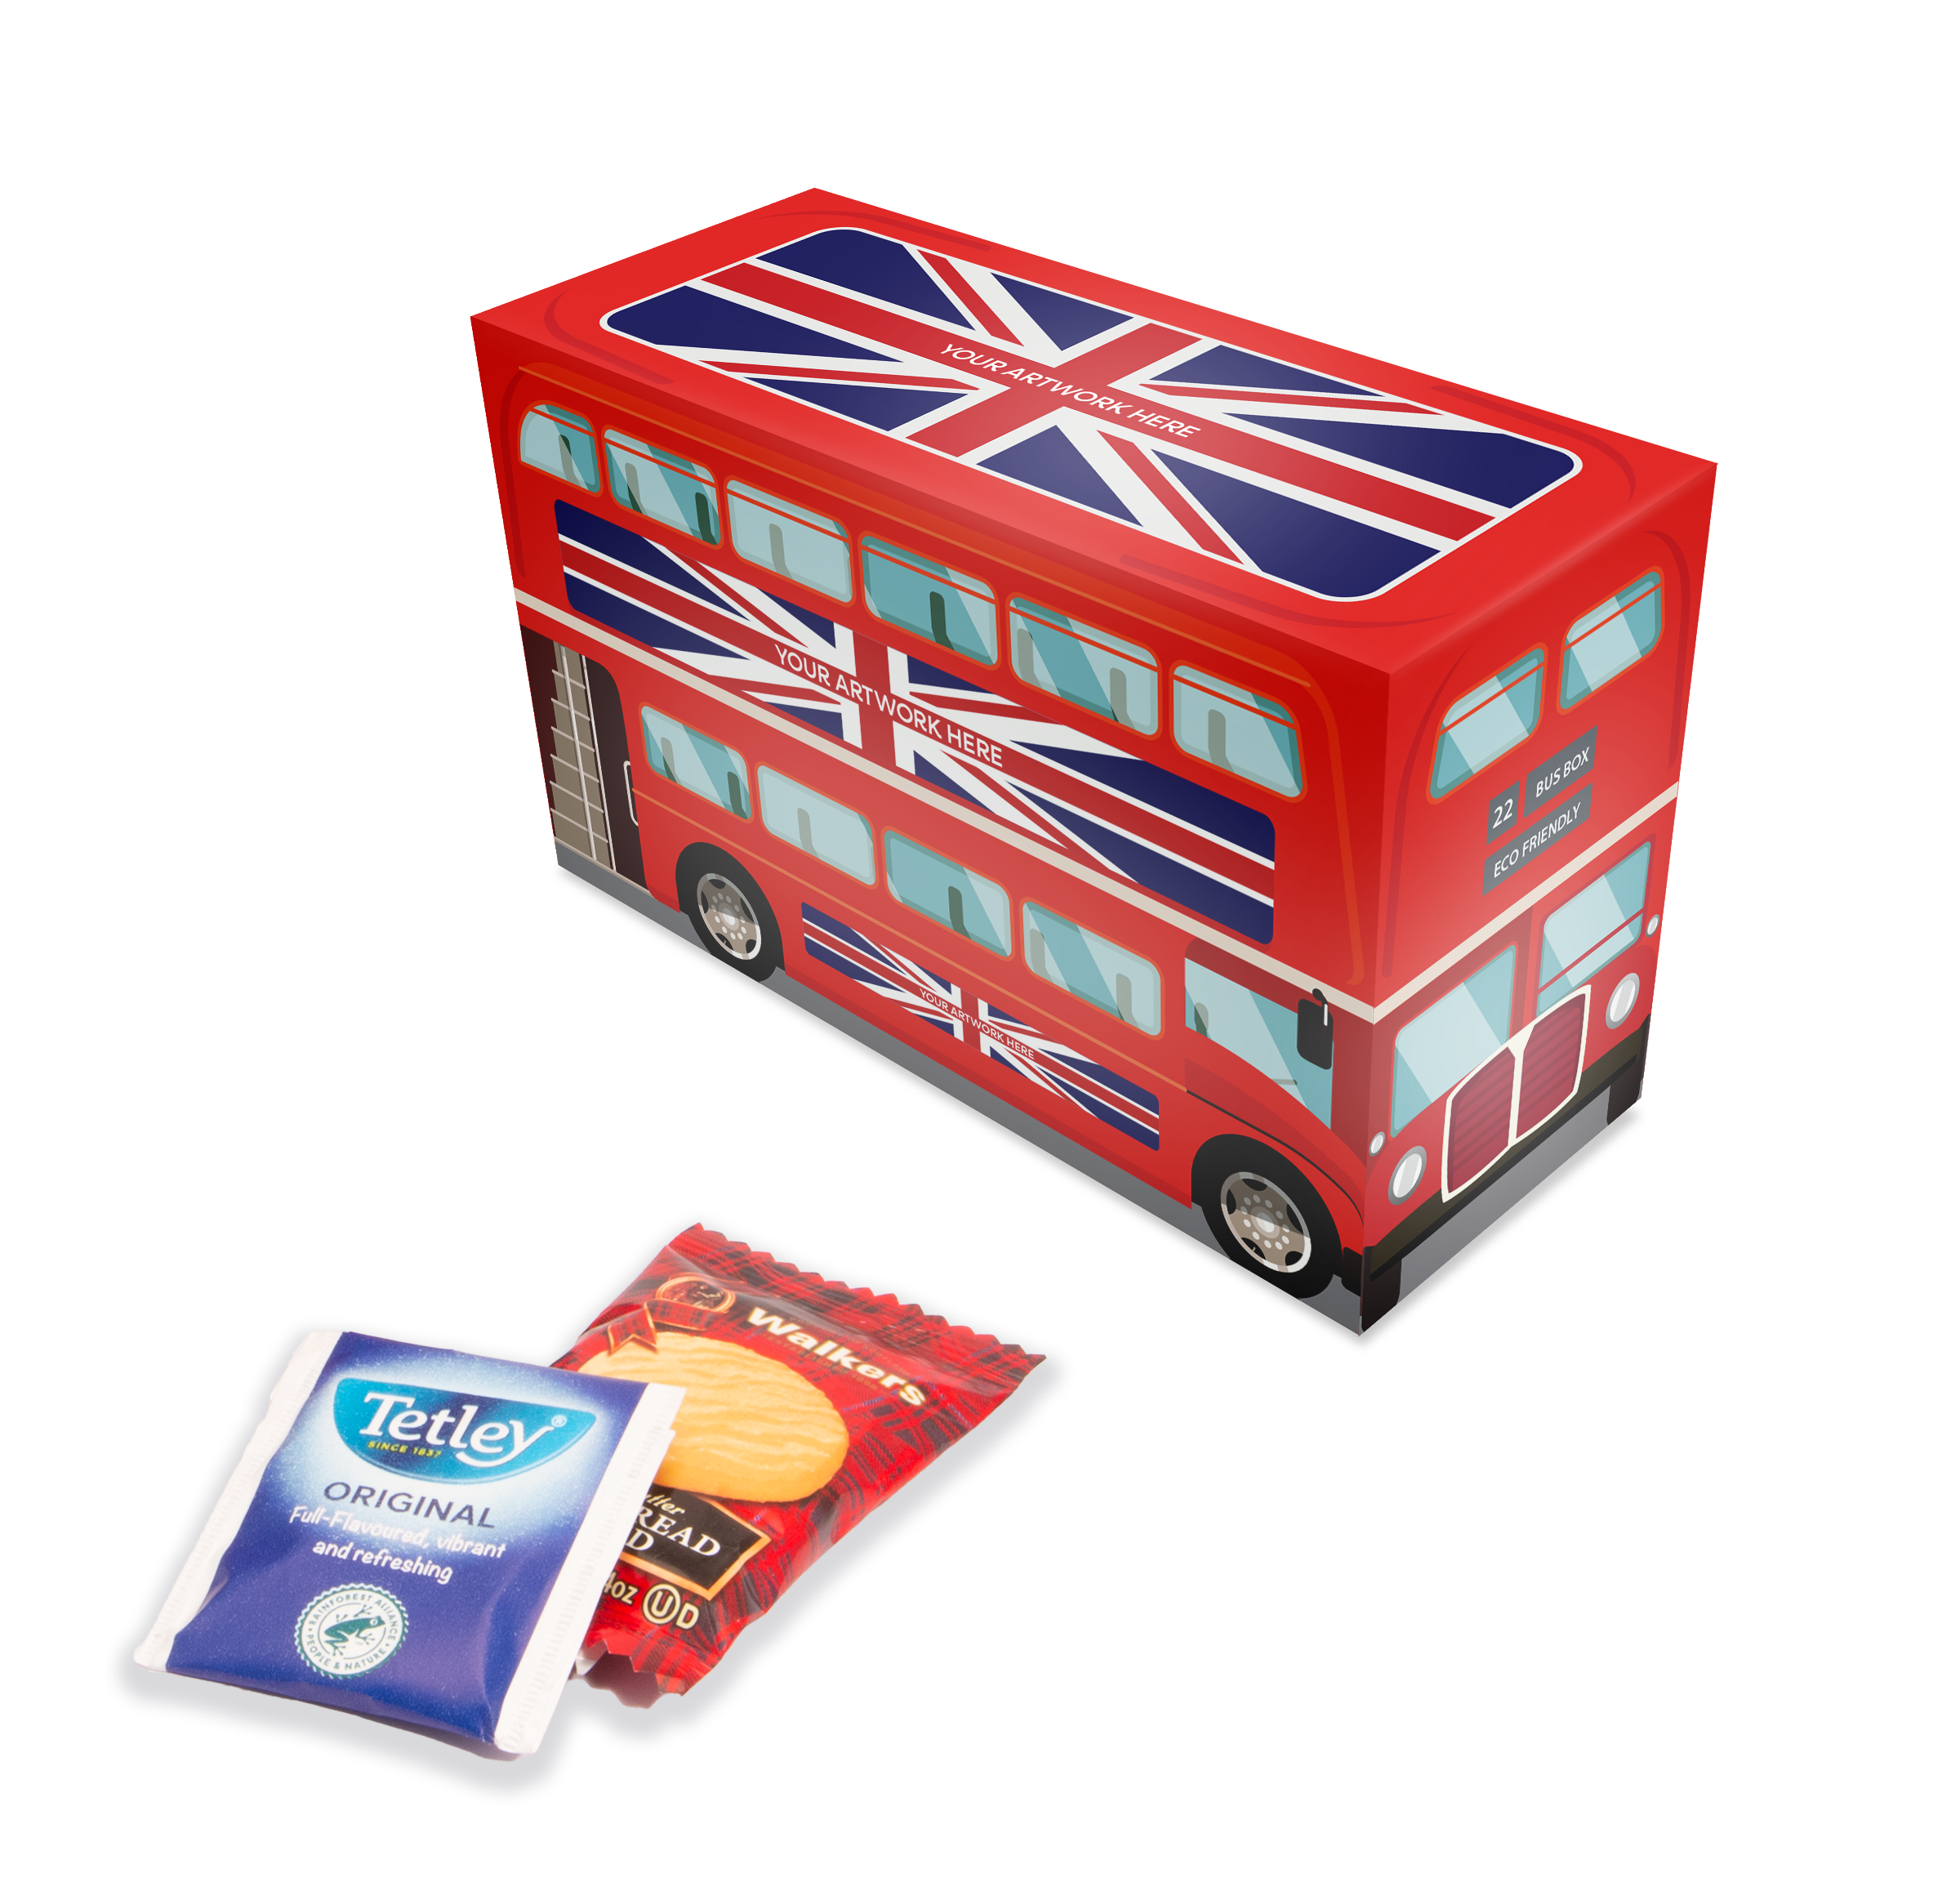 Platinum Jubilee – Eco Bus Box - Tea & Biscuits